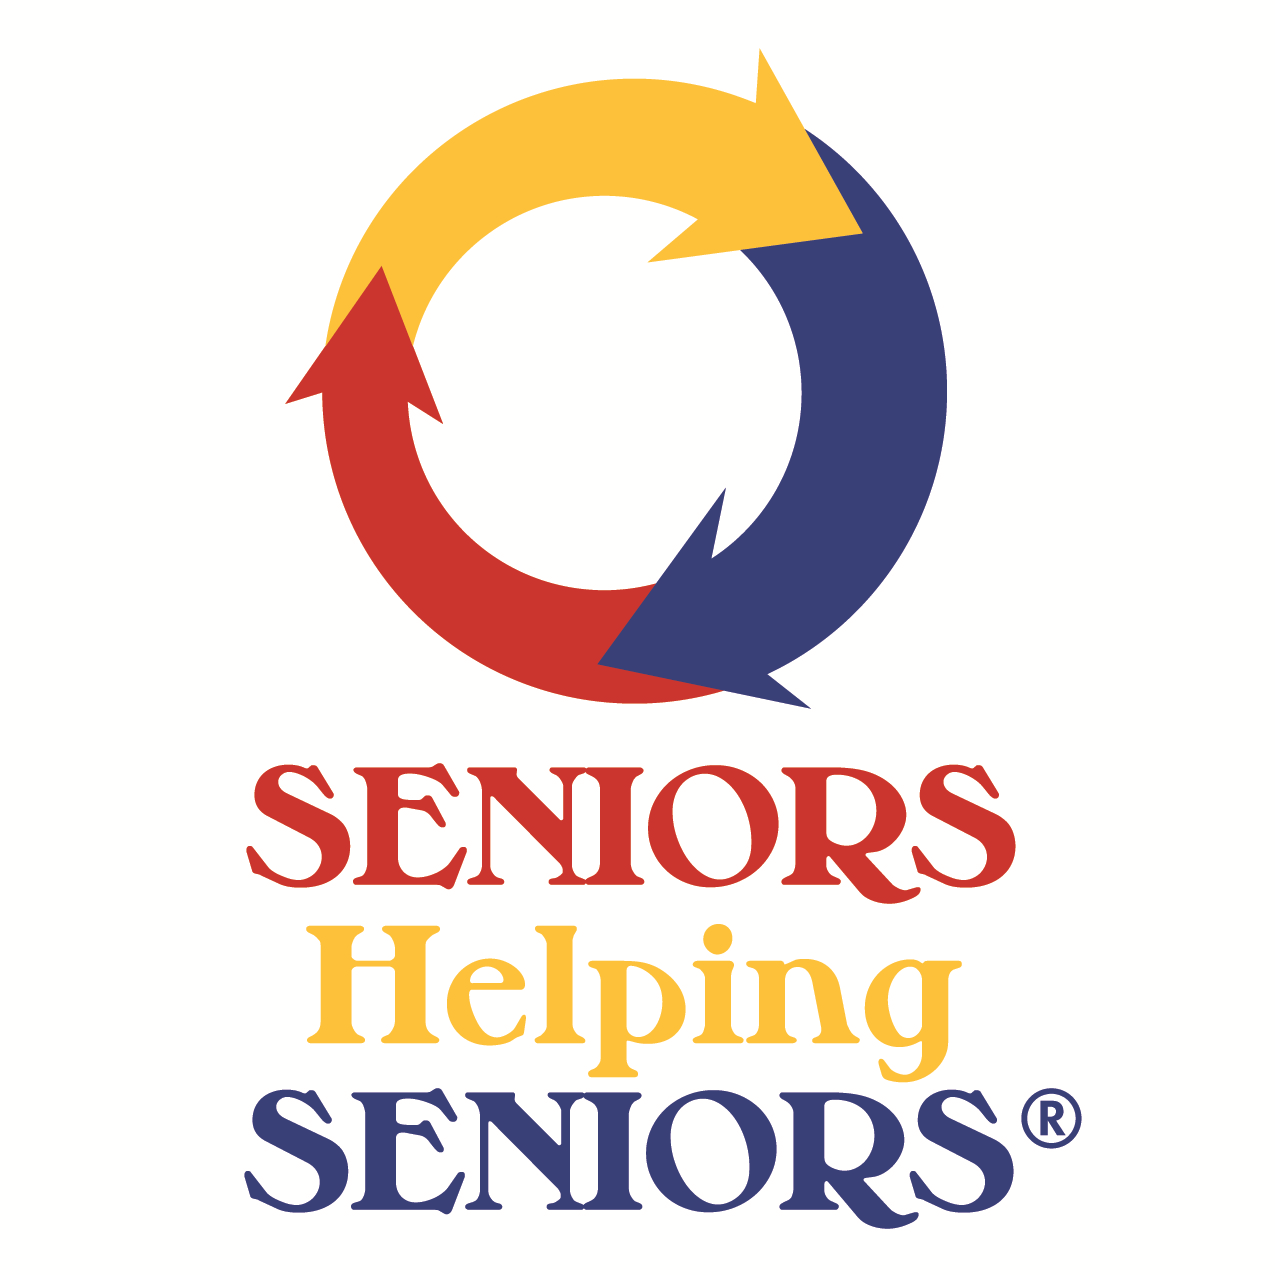 Seniors Helping Seniors(r) logo